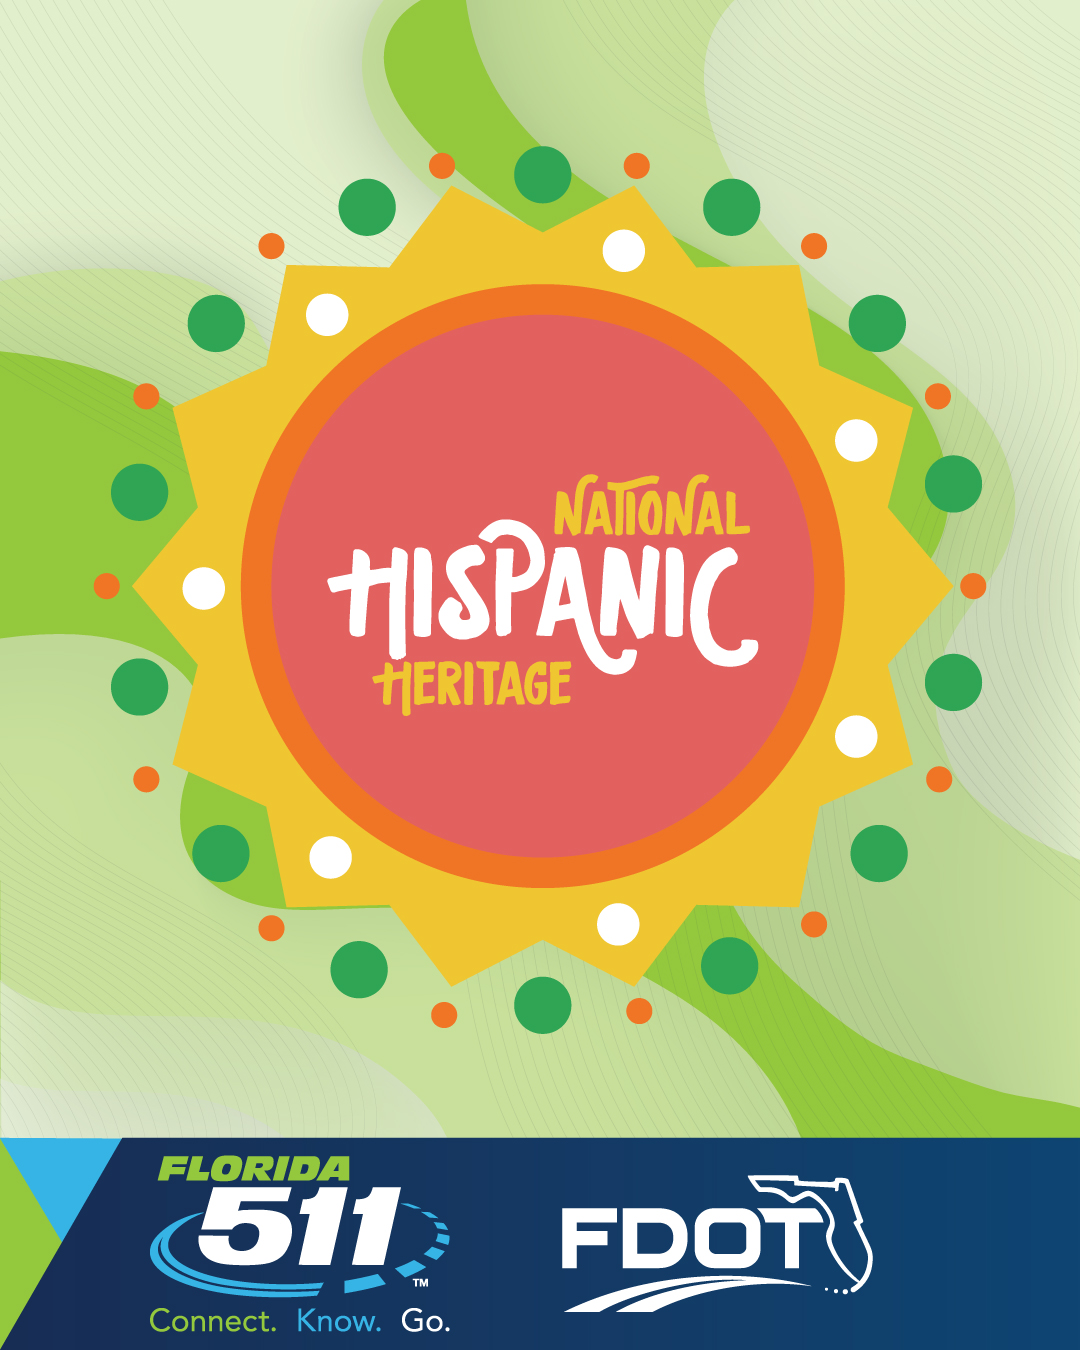 Celebrate Hispanic Heritage Month with FL511!